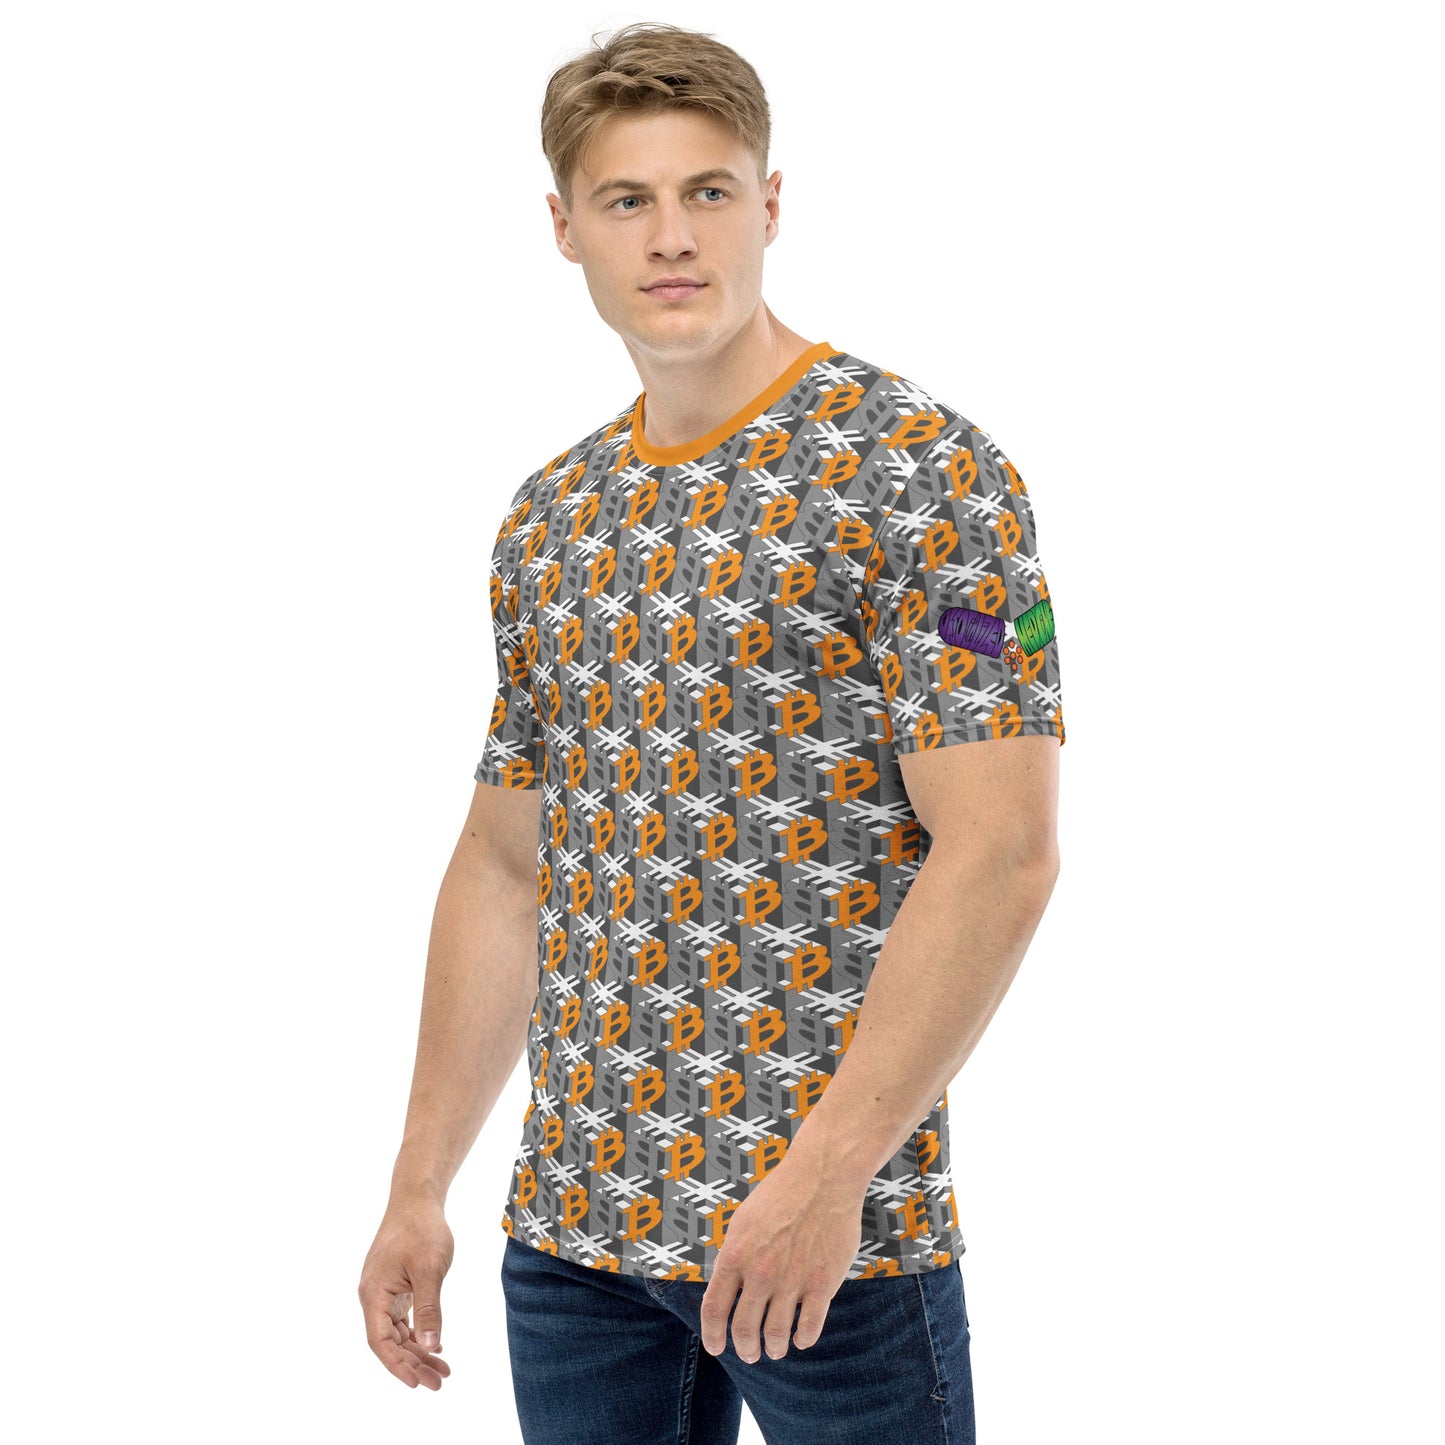 Bitcoin Dice Lattice Men's Crew Neck T-Shirt - Gray